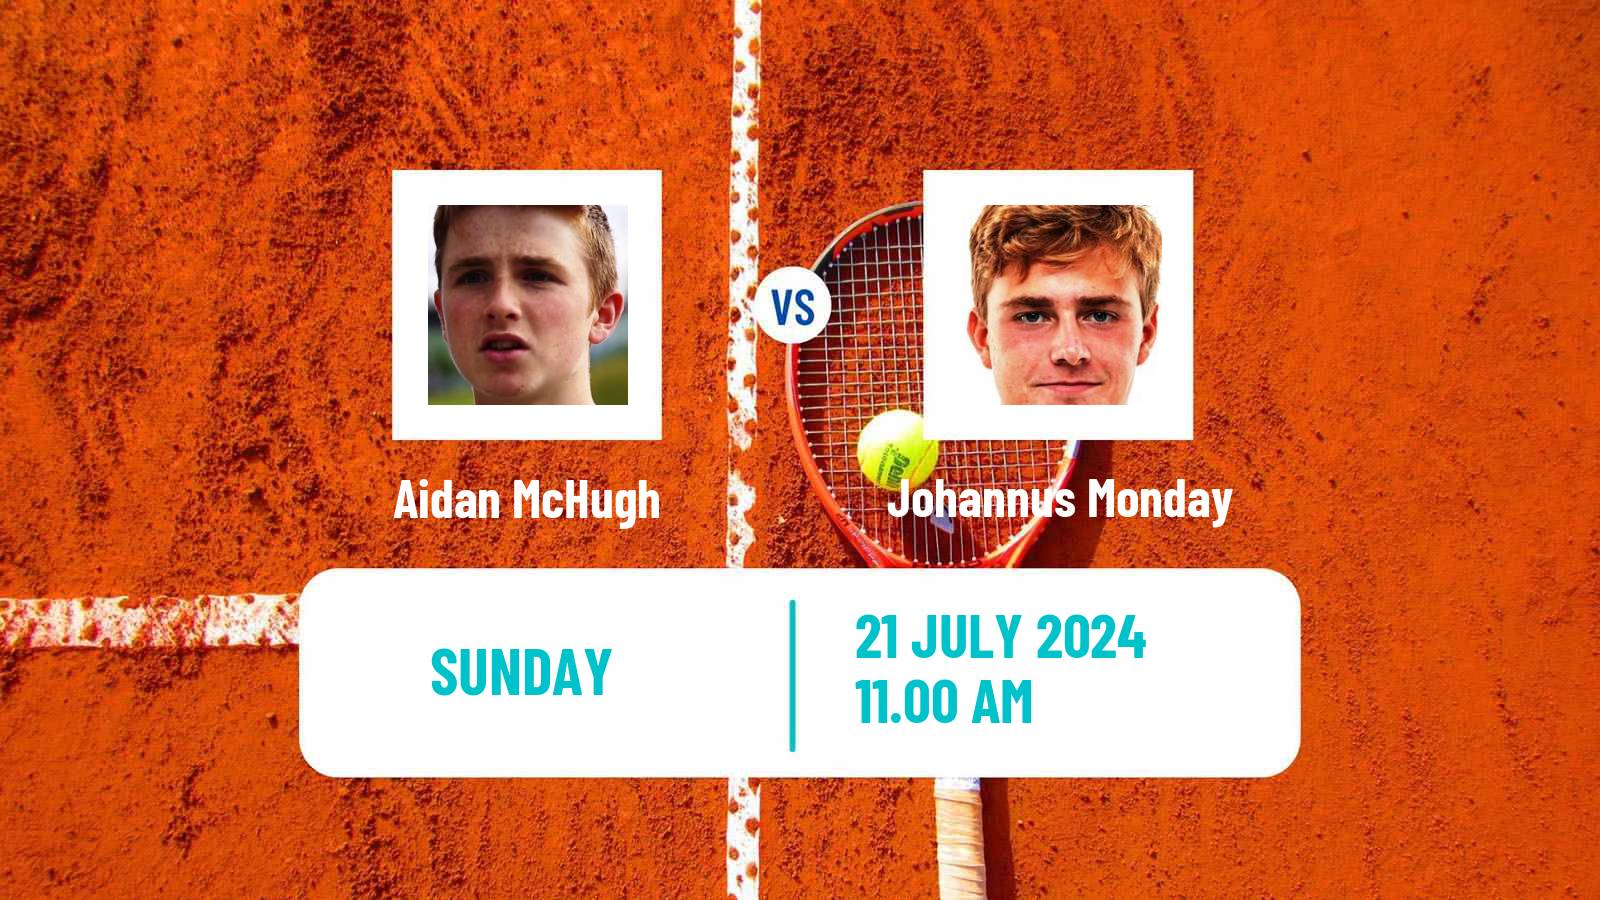 Tennis ITF M25 East Lansing Mi Men Aidan McHugh - Johannus Monday